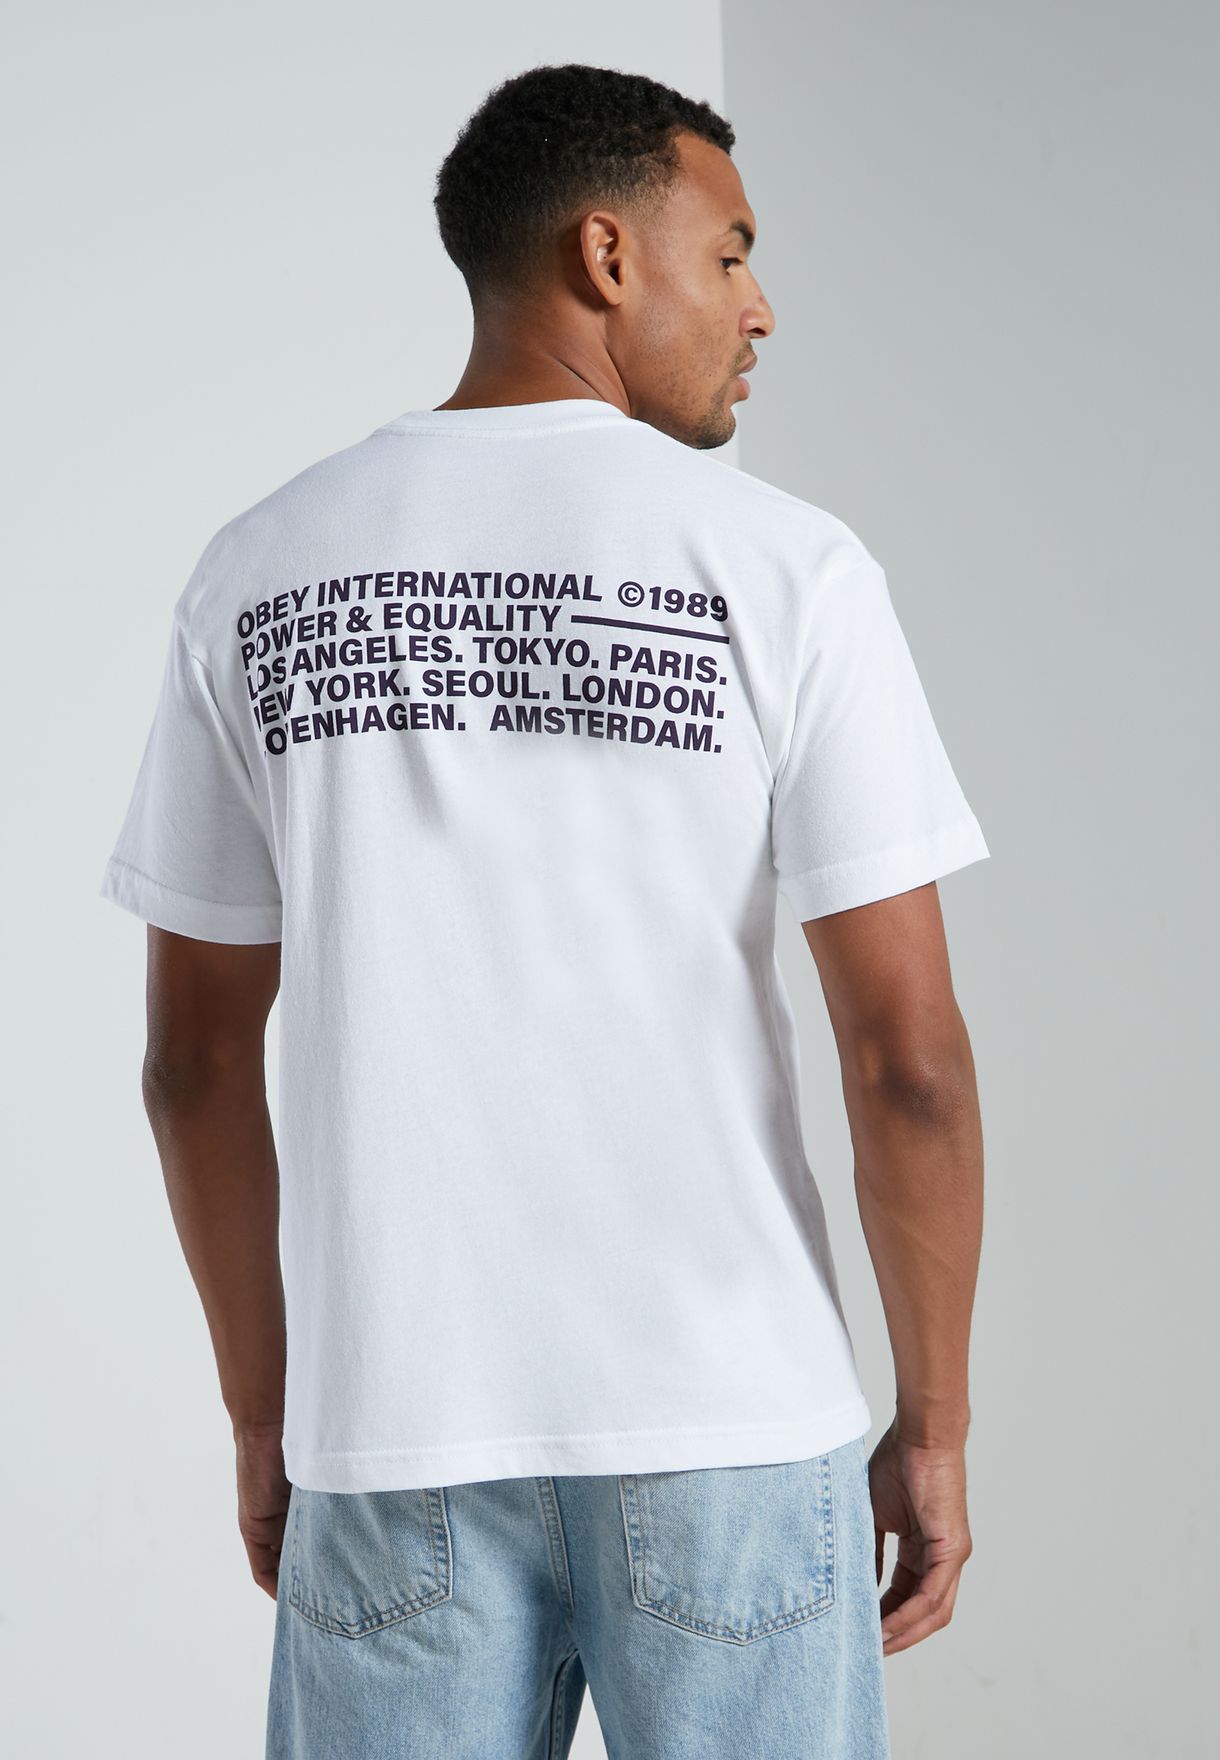 Power & Equality T-Shirt